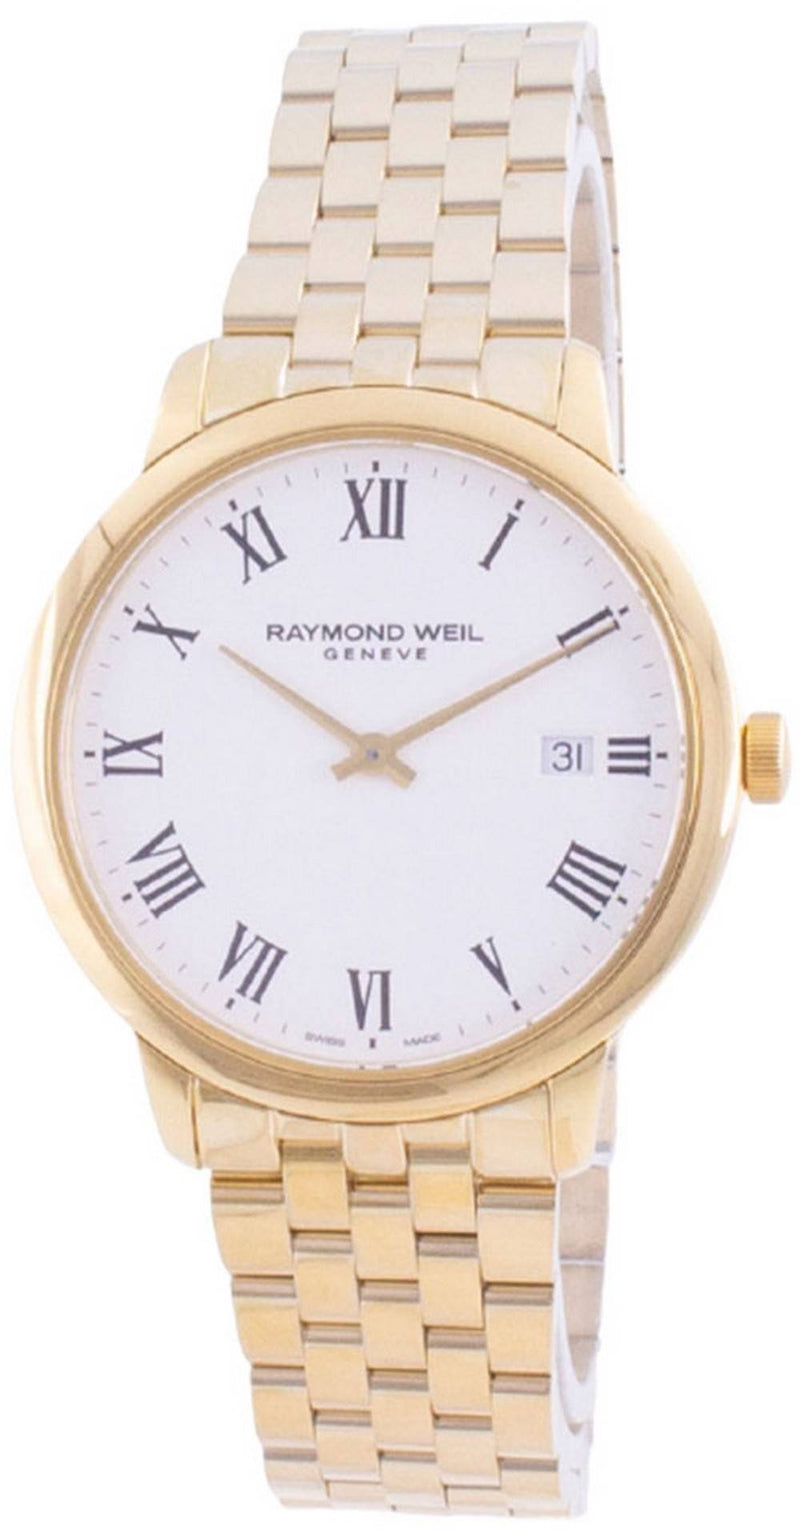 Raymond Weil Toccata Geneve Quartz 5485-P-00300 Men's Watch